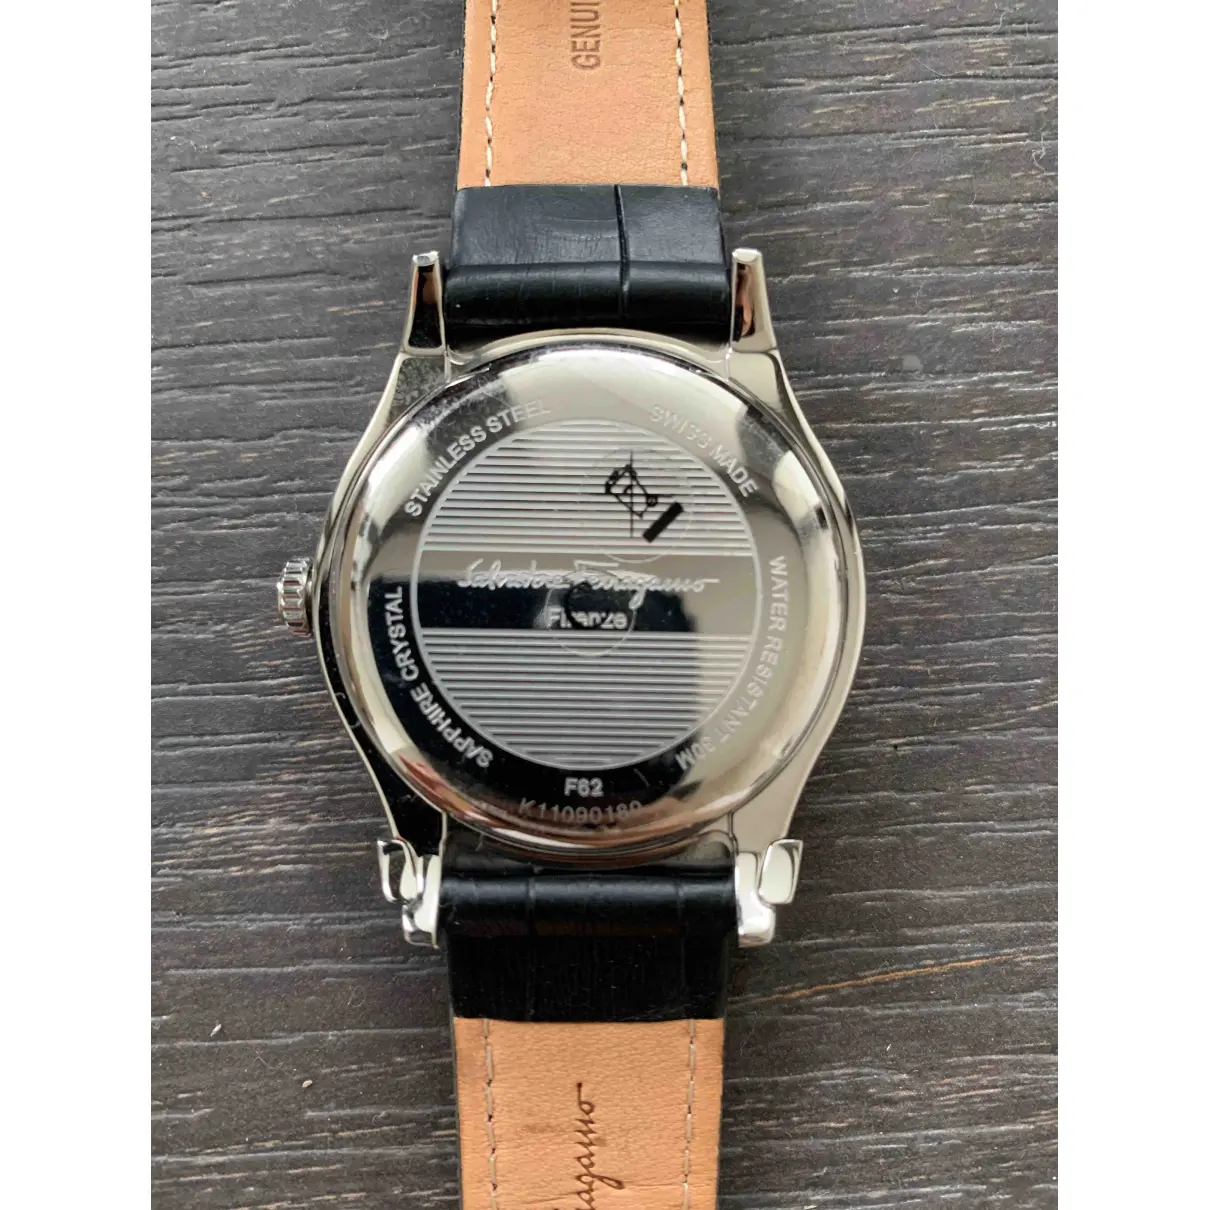 Buy Salvatore Ferragamo Leather watch online